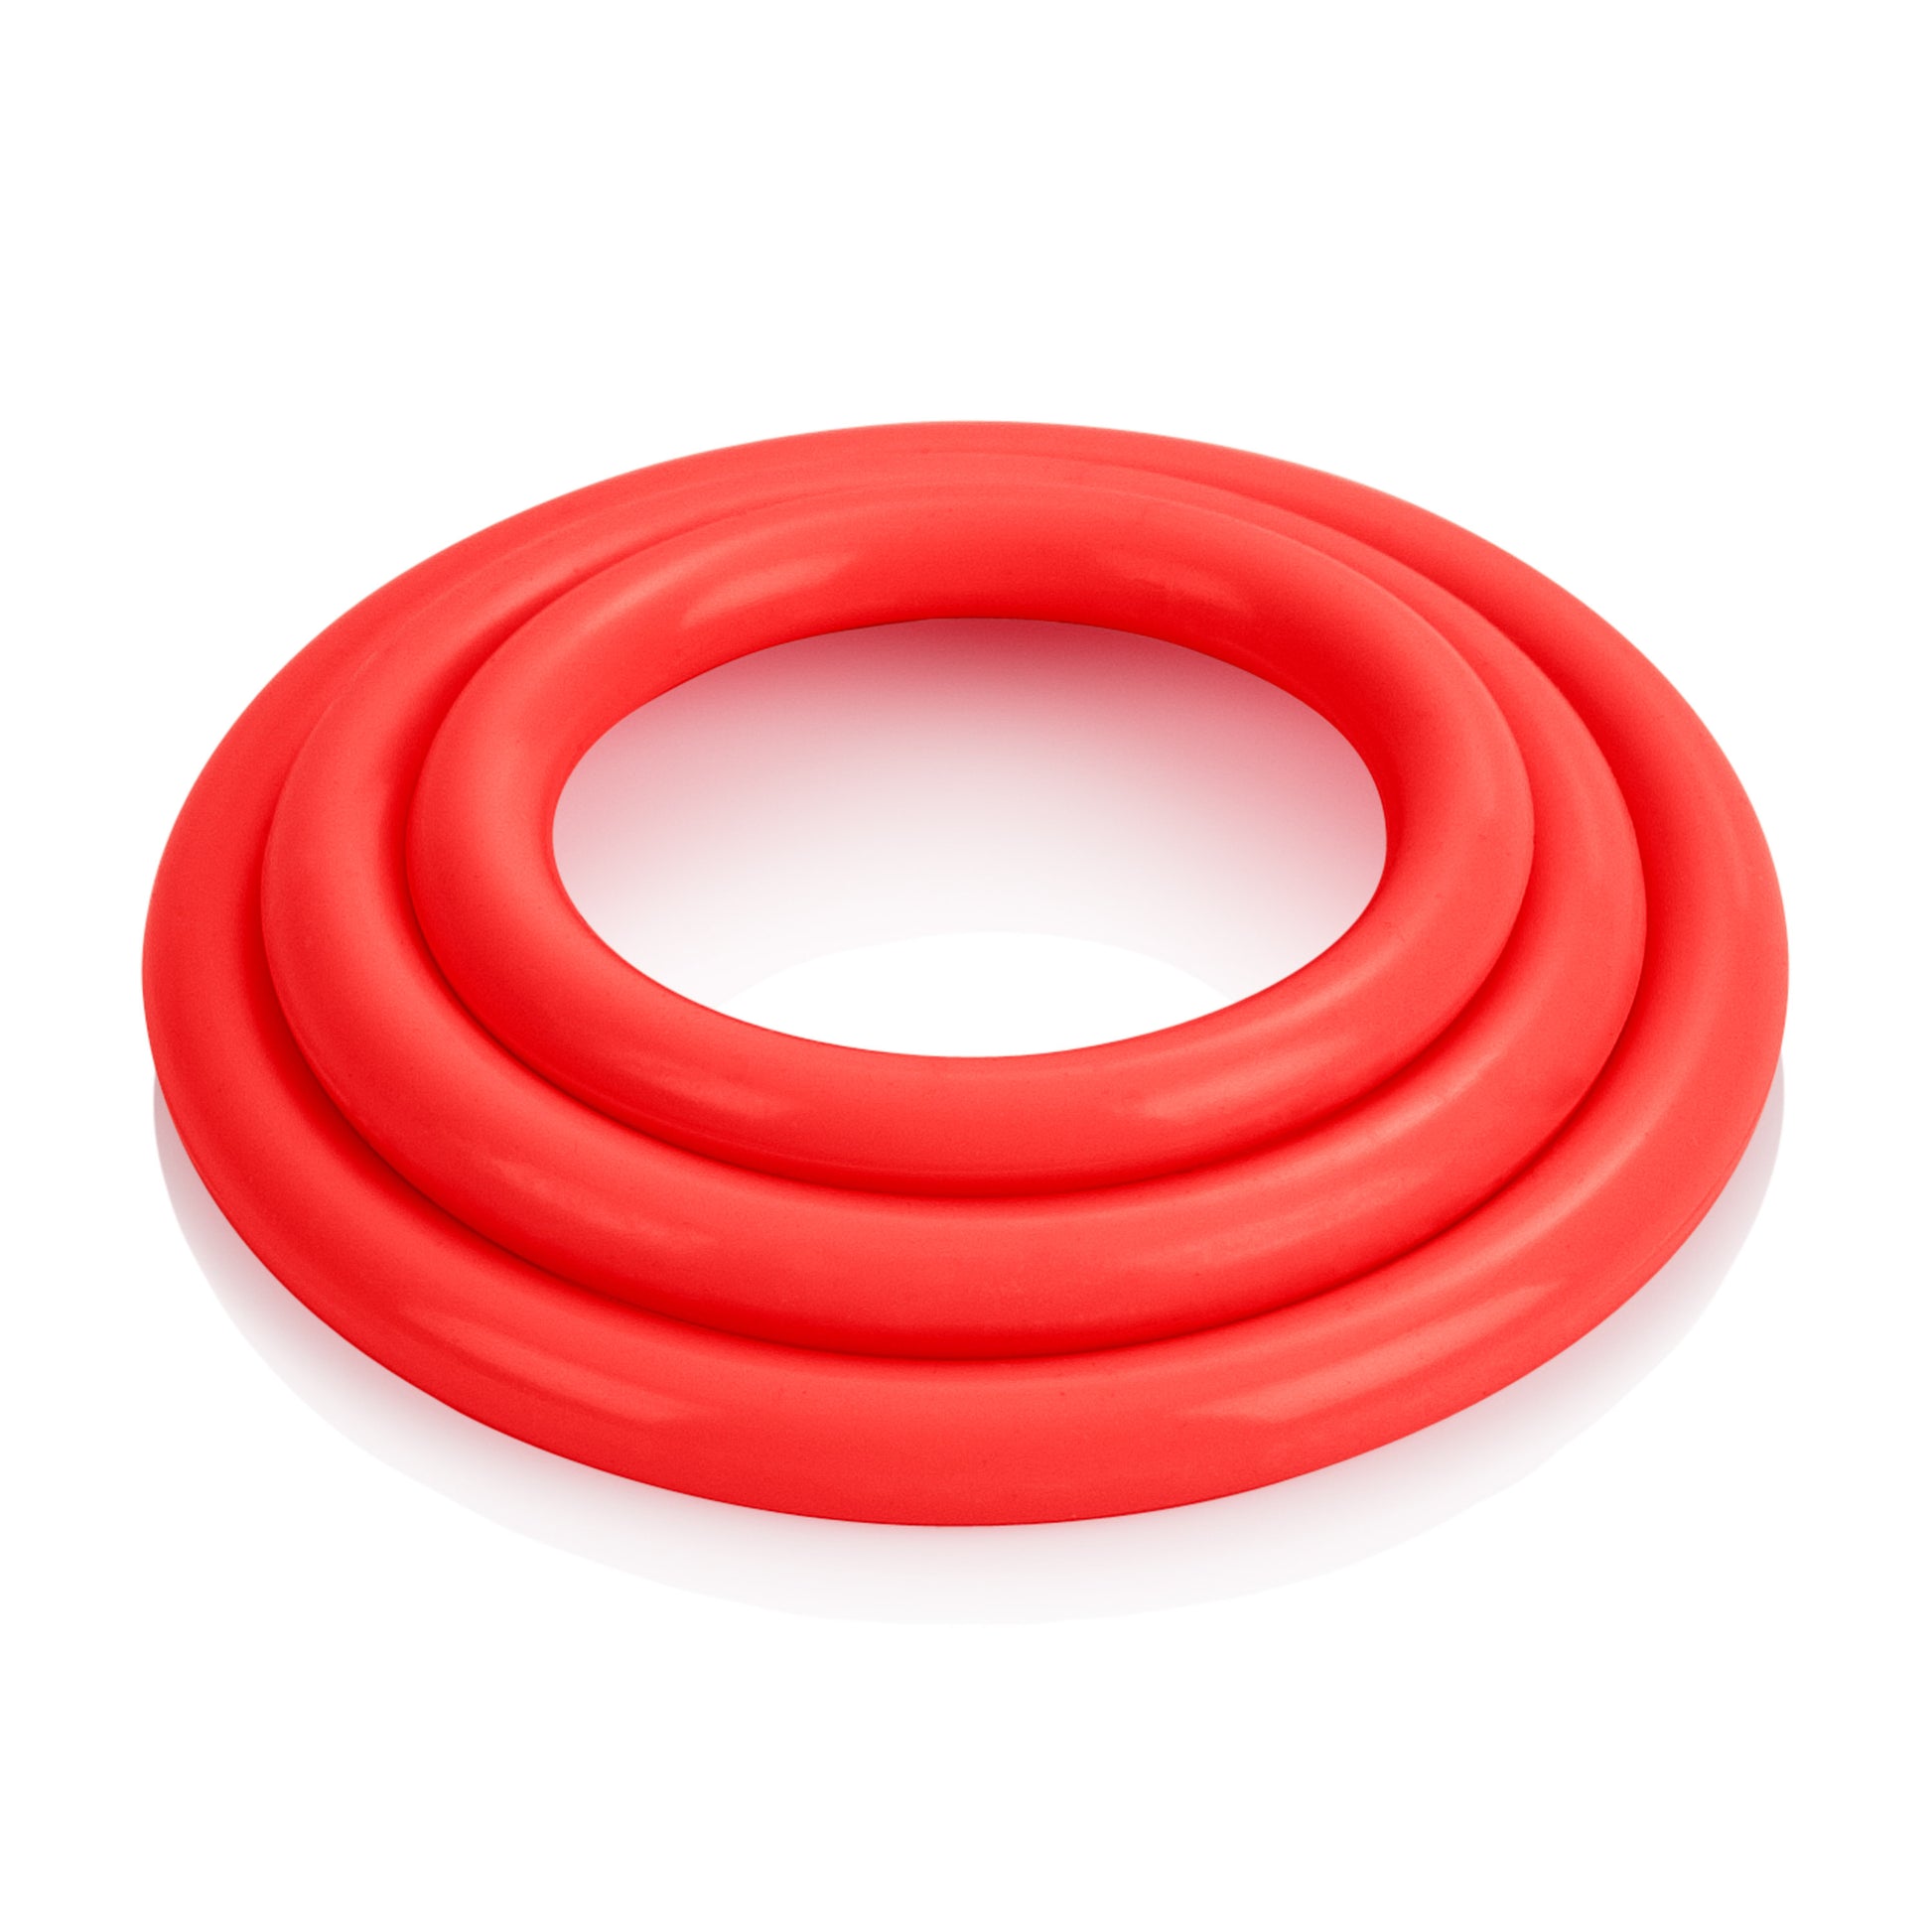 Tri-Rings - Red SE1421112